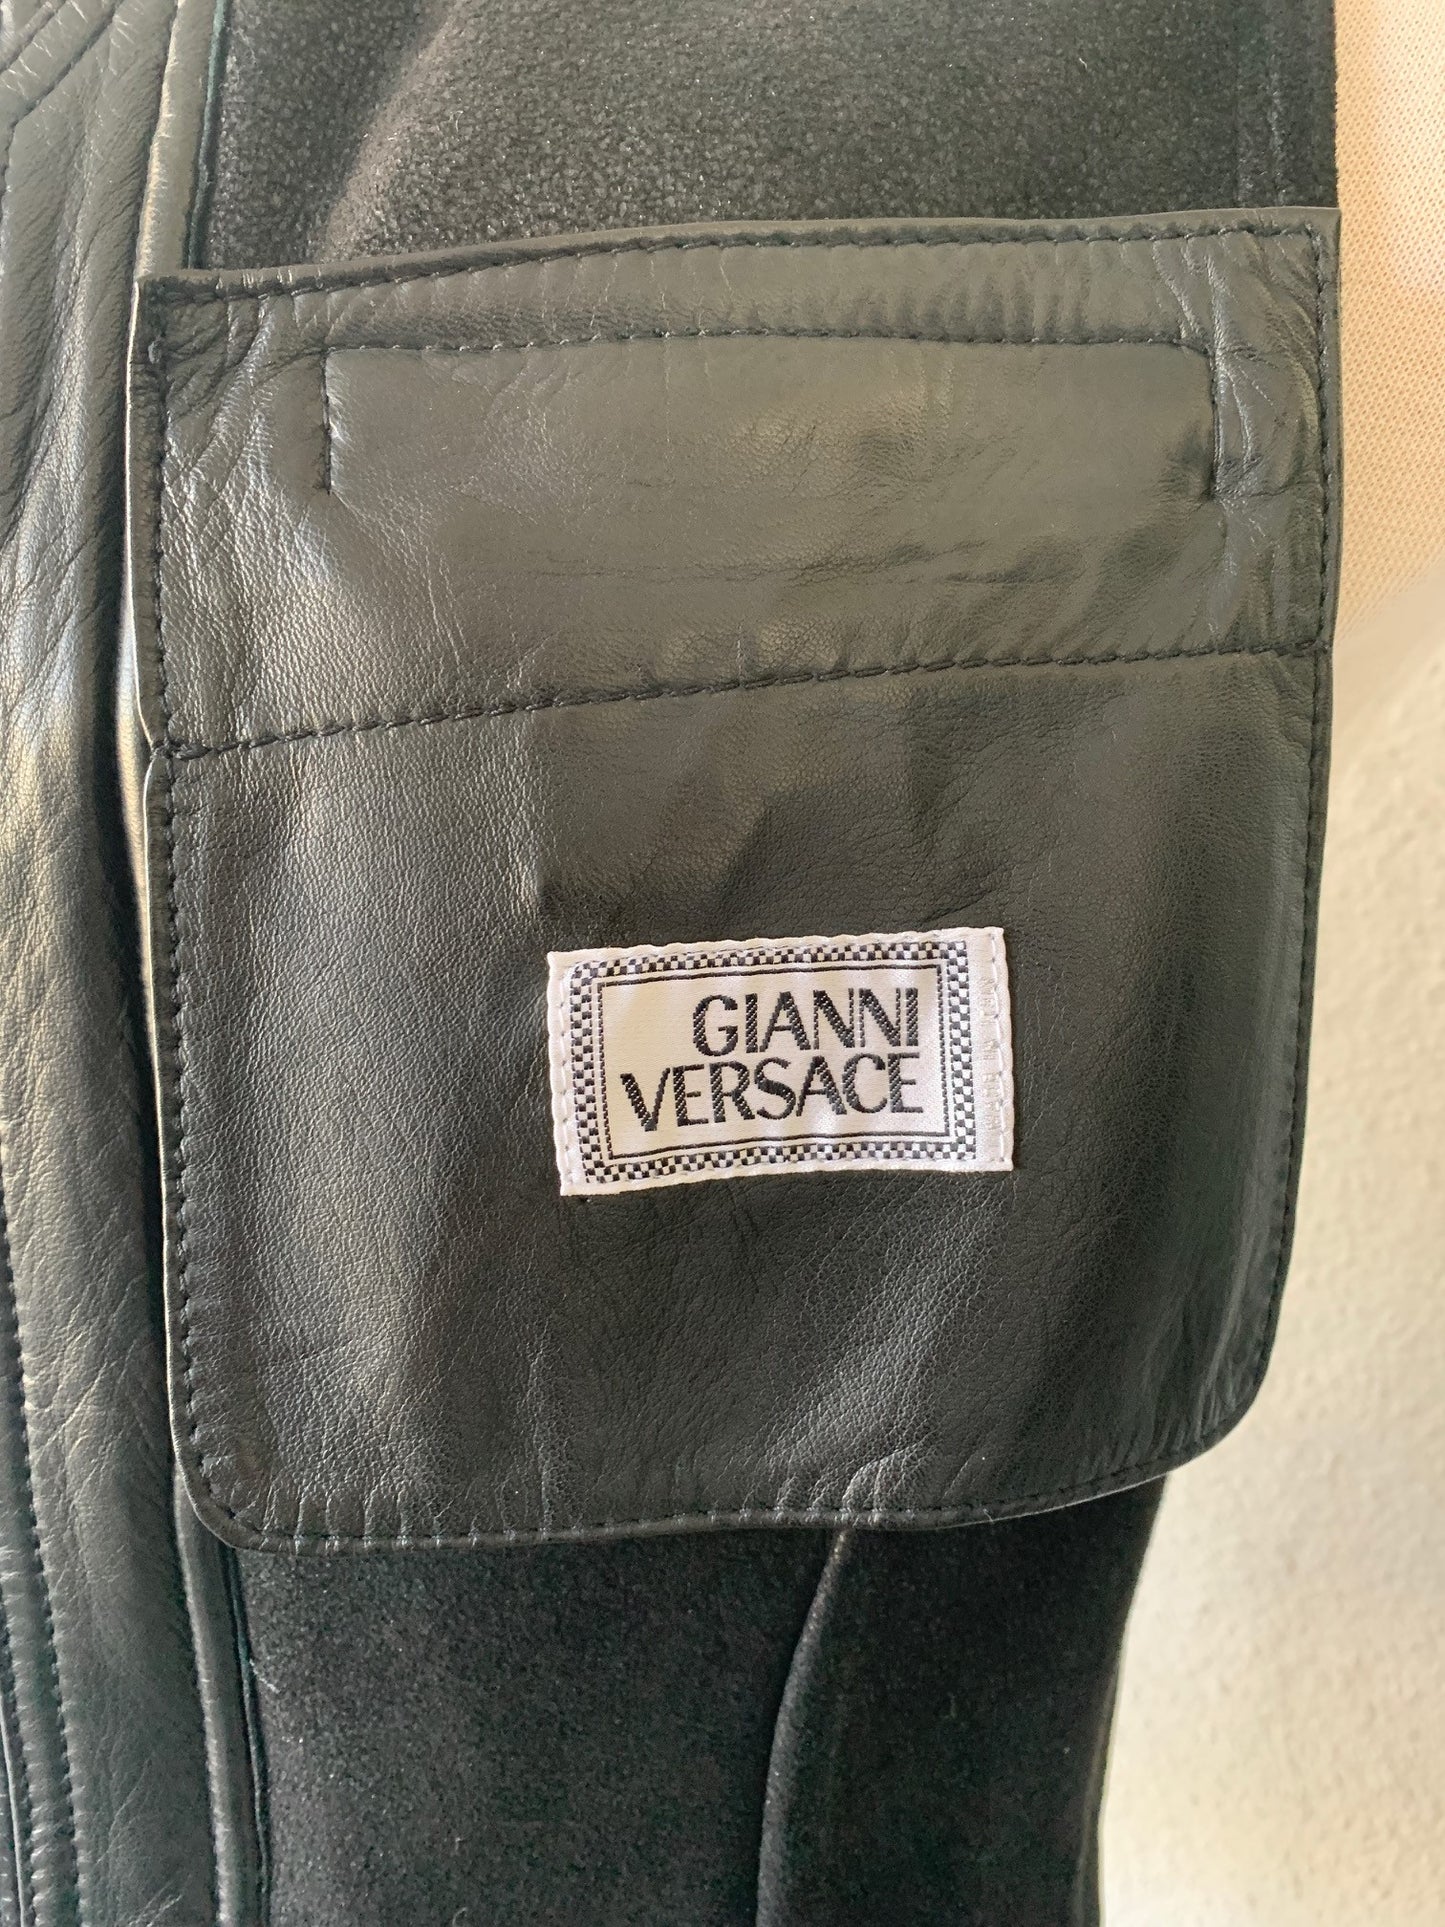 Black Shearling Zipper Vest by Gianni Versace